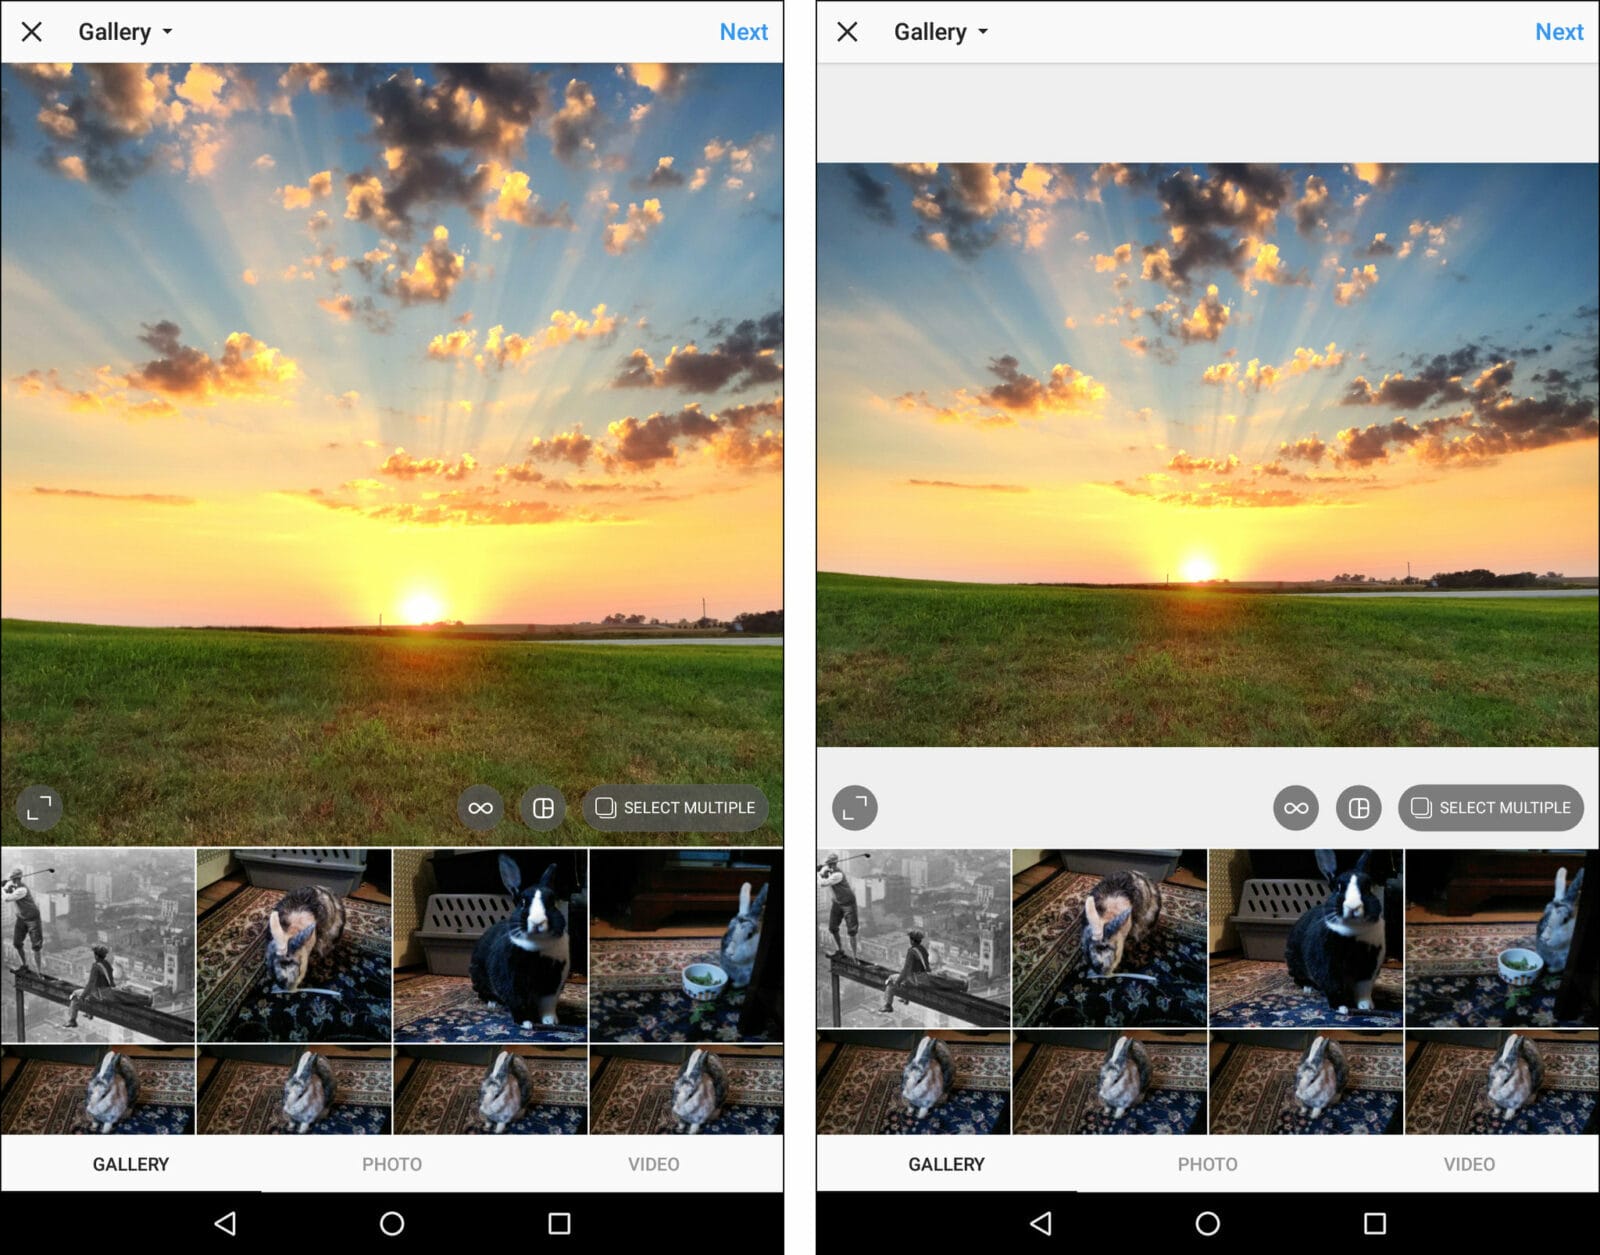 27techtipwebART superJumbo Pourquoi Instagram recadre-t-il les photos multiples ?